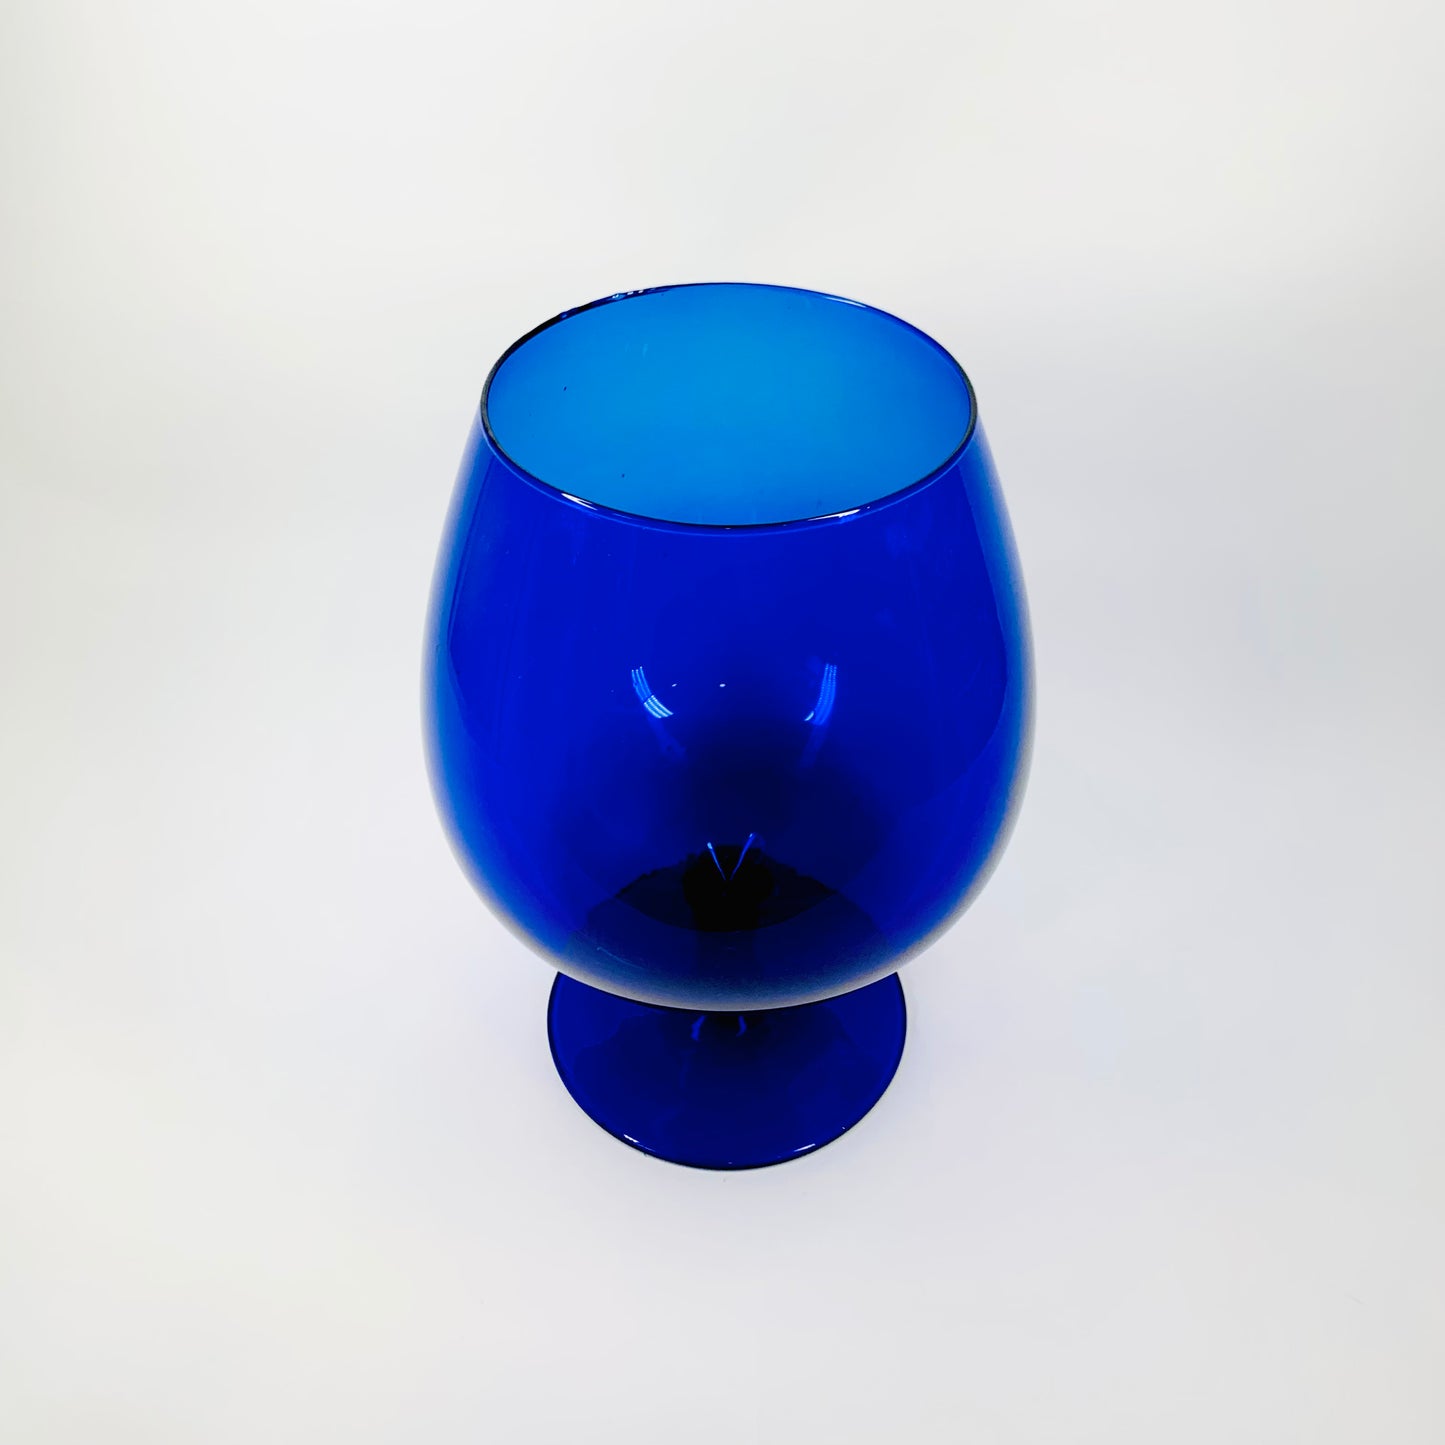 Large Midcentury Italian cobalt blue glass brandy balloon vase with clear stem